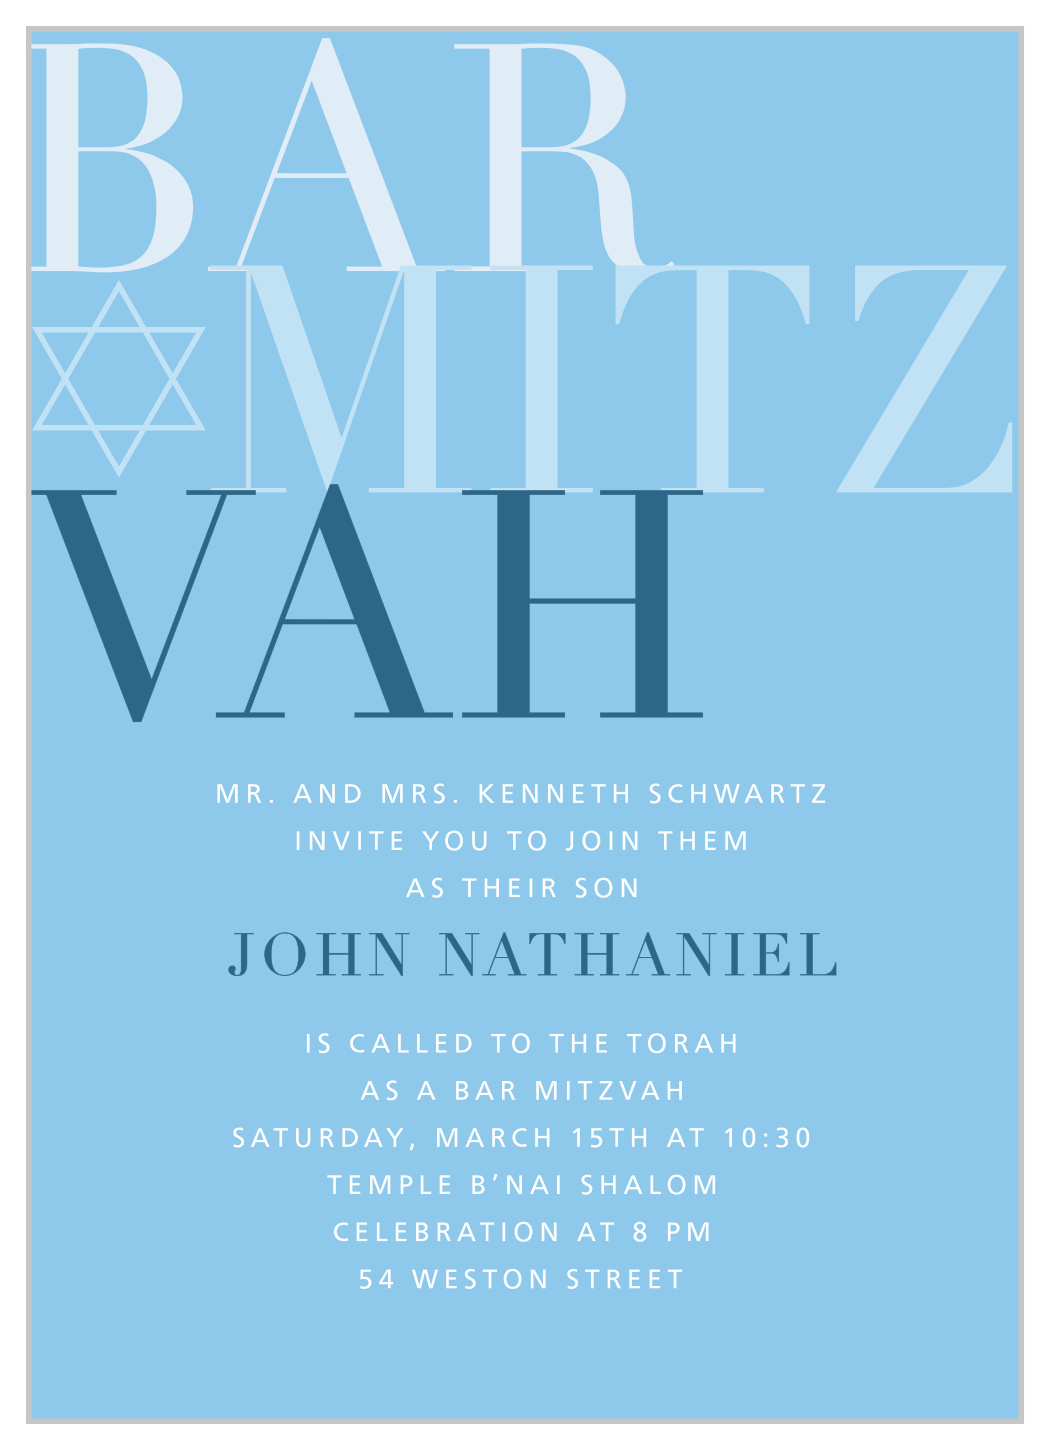 Bold Mitzvah Bar Mitzvah Invitations from Basic Invite